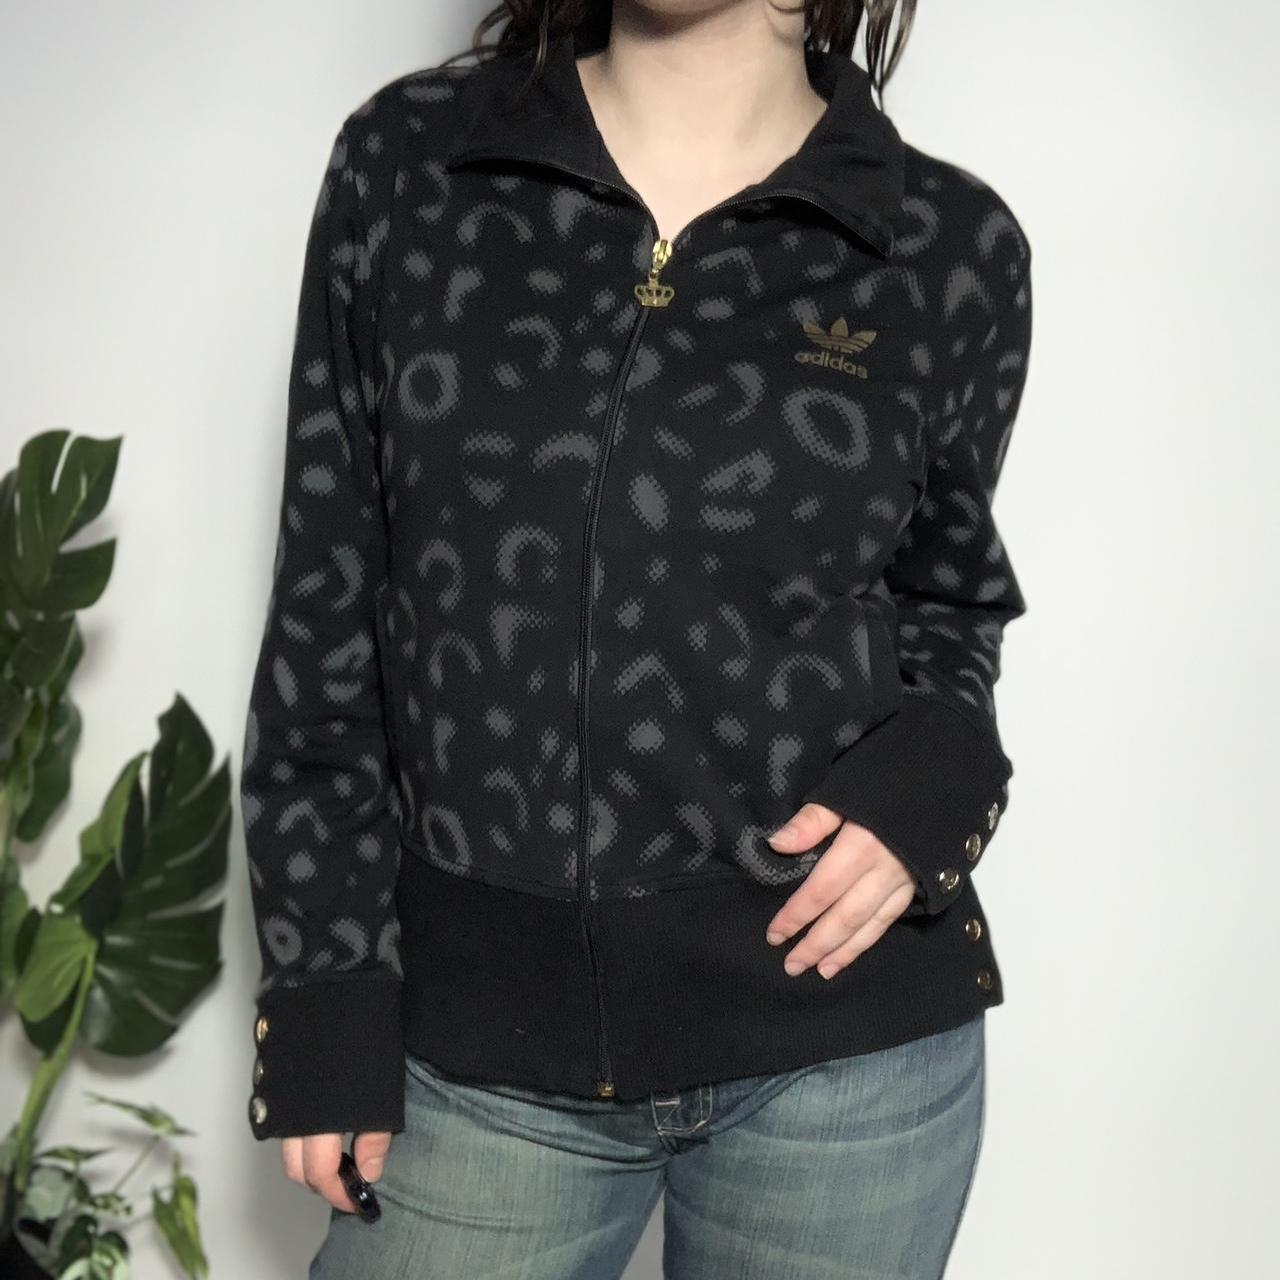 Adidas originals vintage y2k leopard print zip up sweatshirt